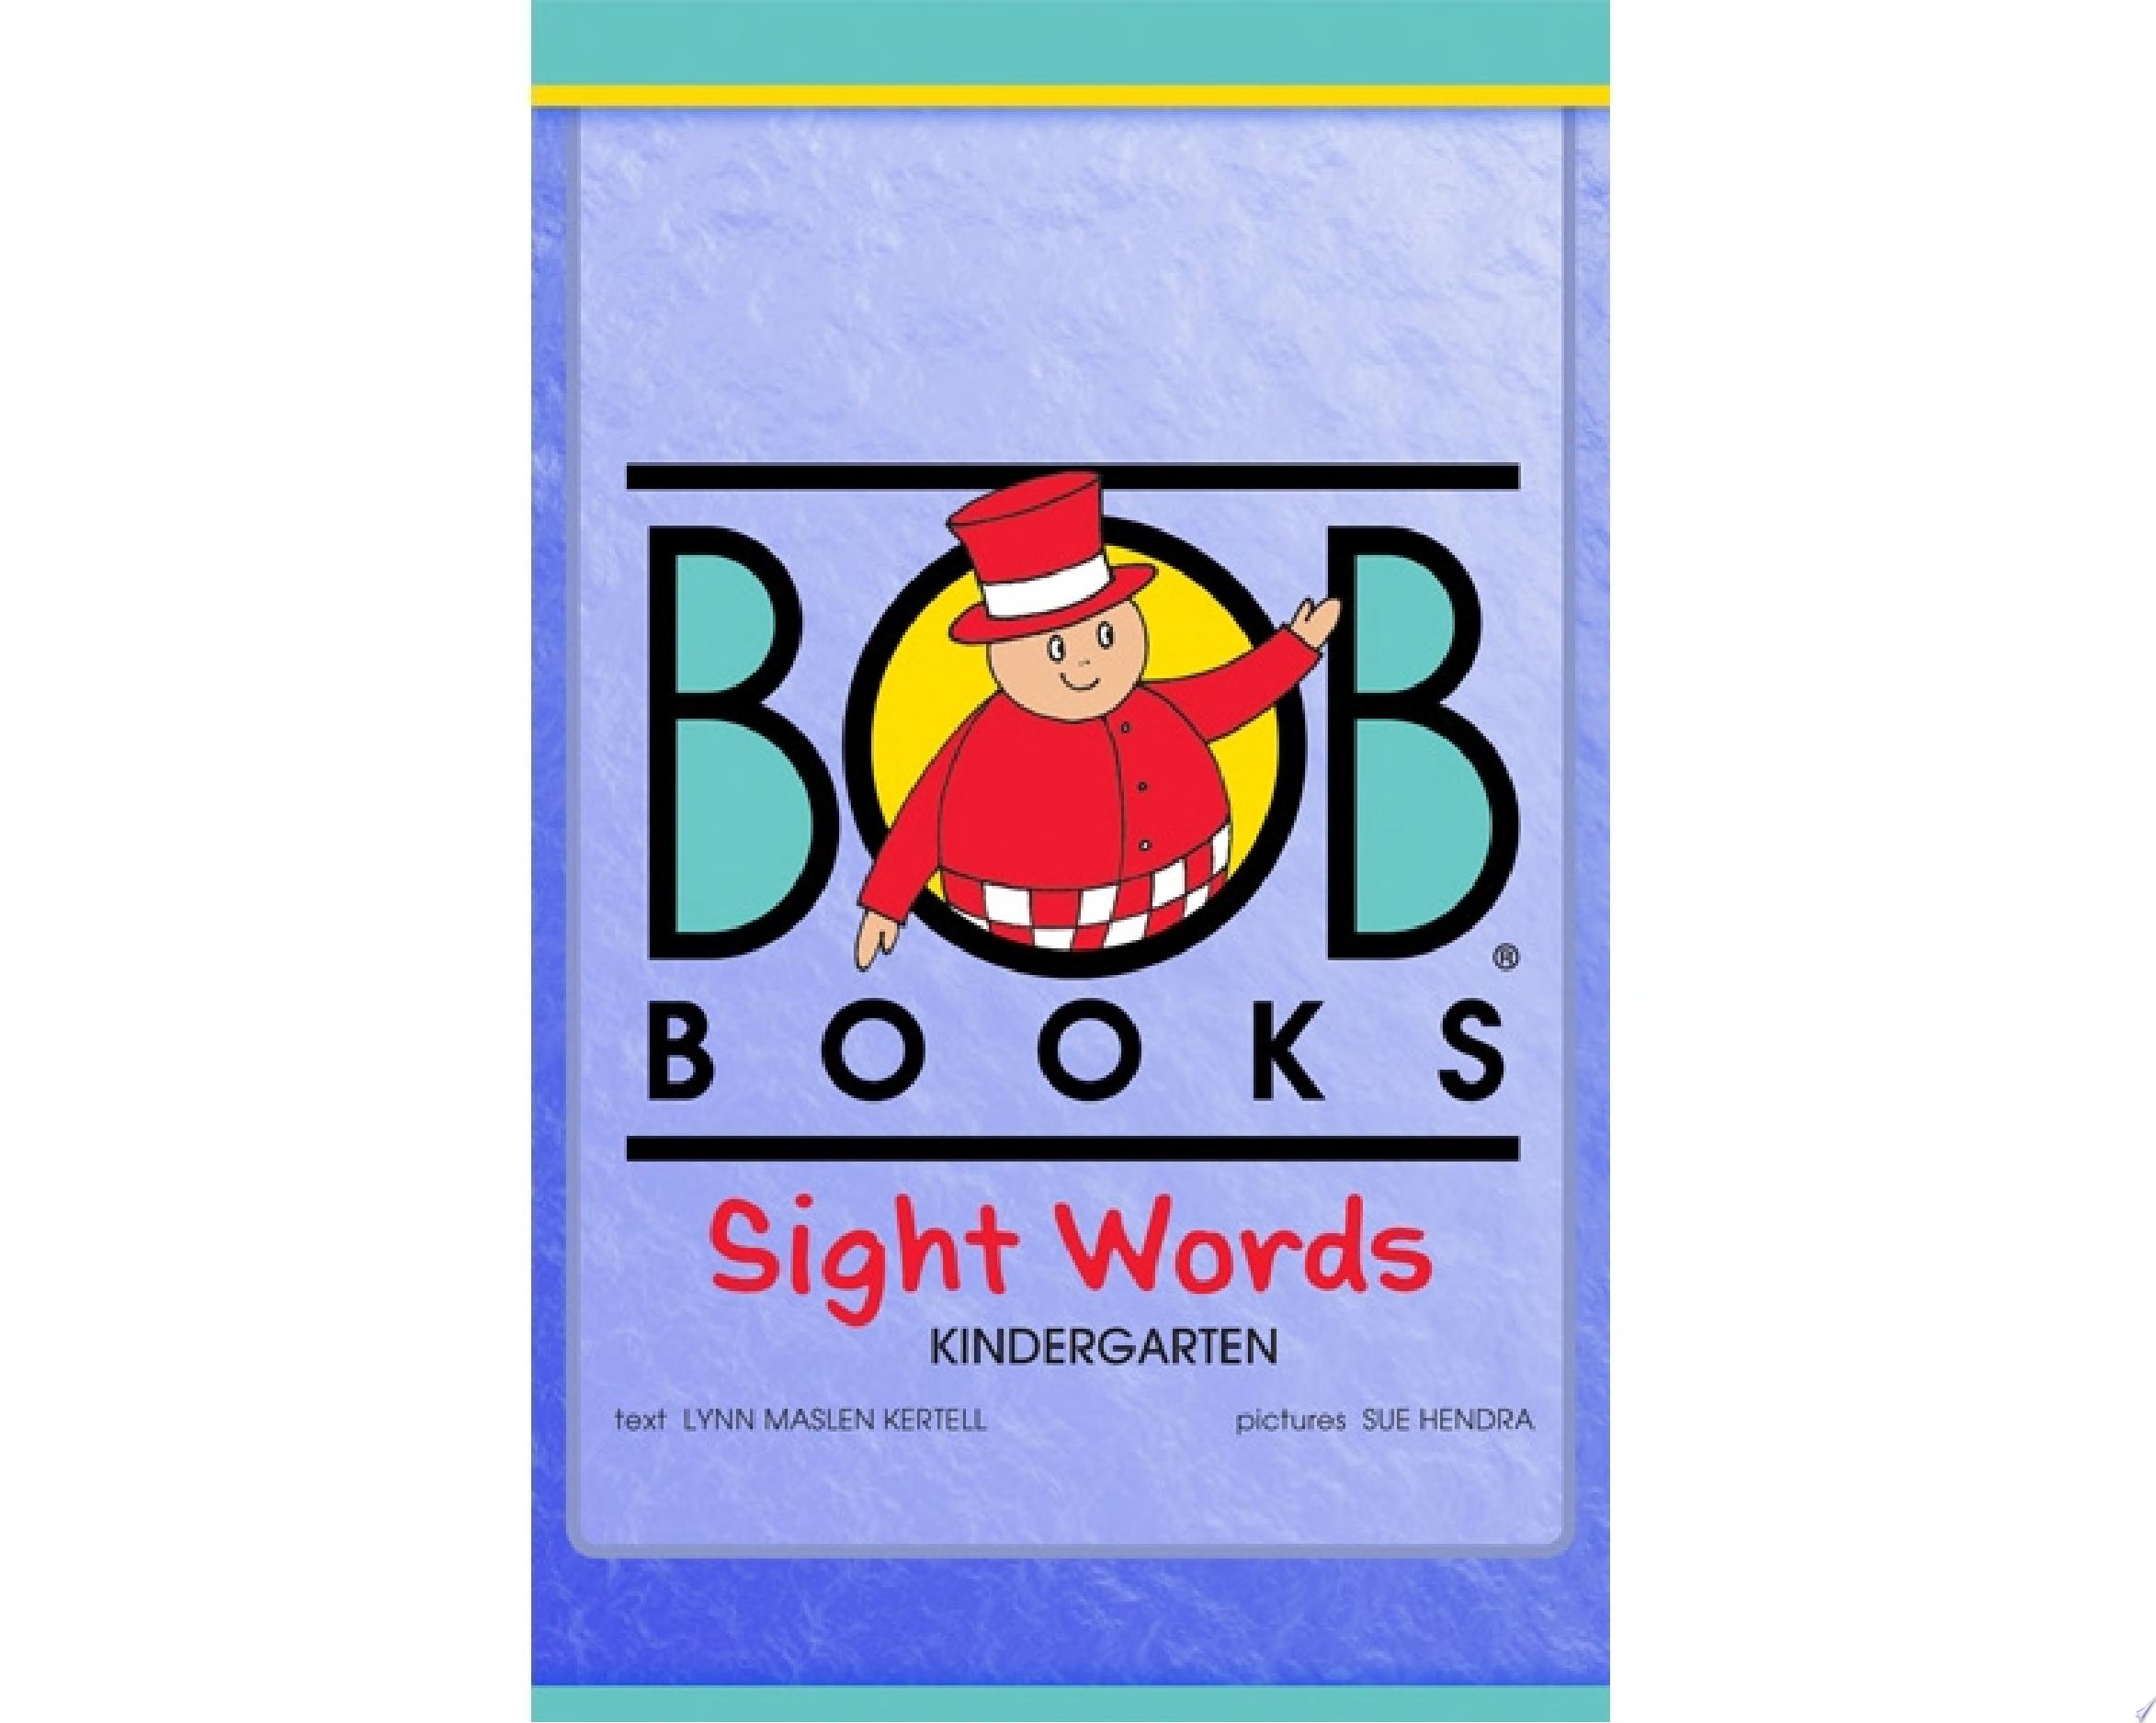 Image for "Bob Books Sight Words: Kindergarten"